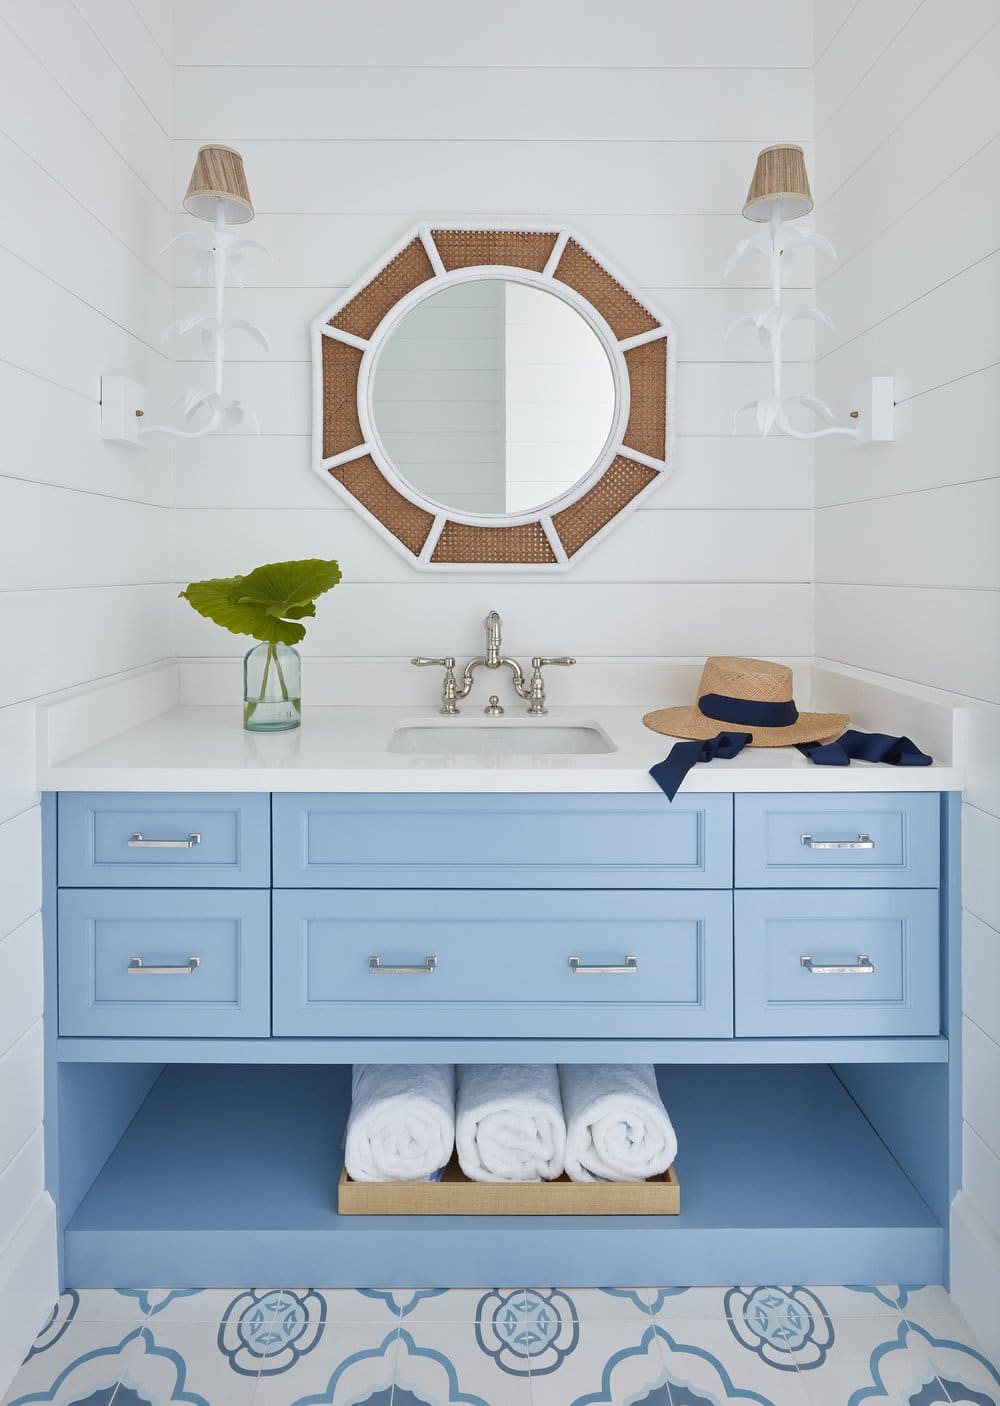  bathroom design - interior design - beach house - beach house design - Kara Miller Interiors - Brantley Photography - bathroom - bathroom decor - blue and white